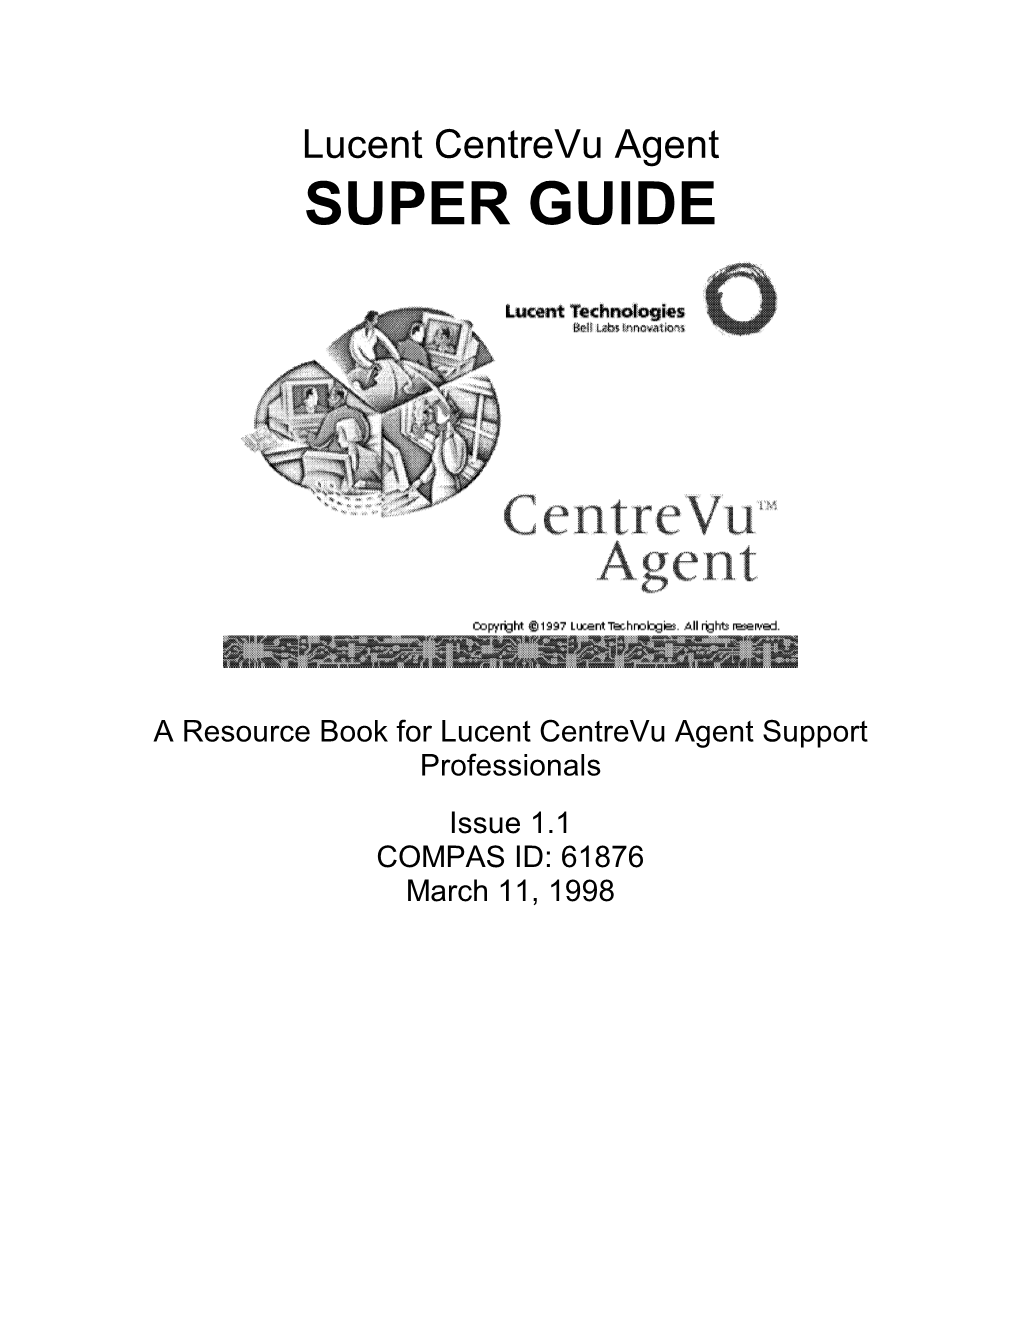 Lucent Centrevu® Agent Super Guide